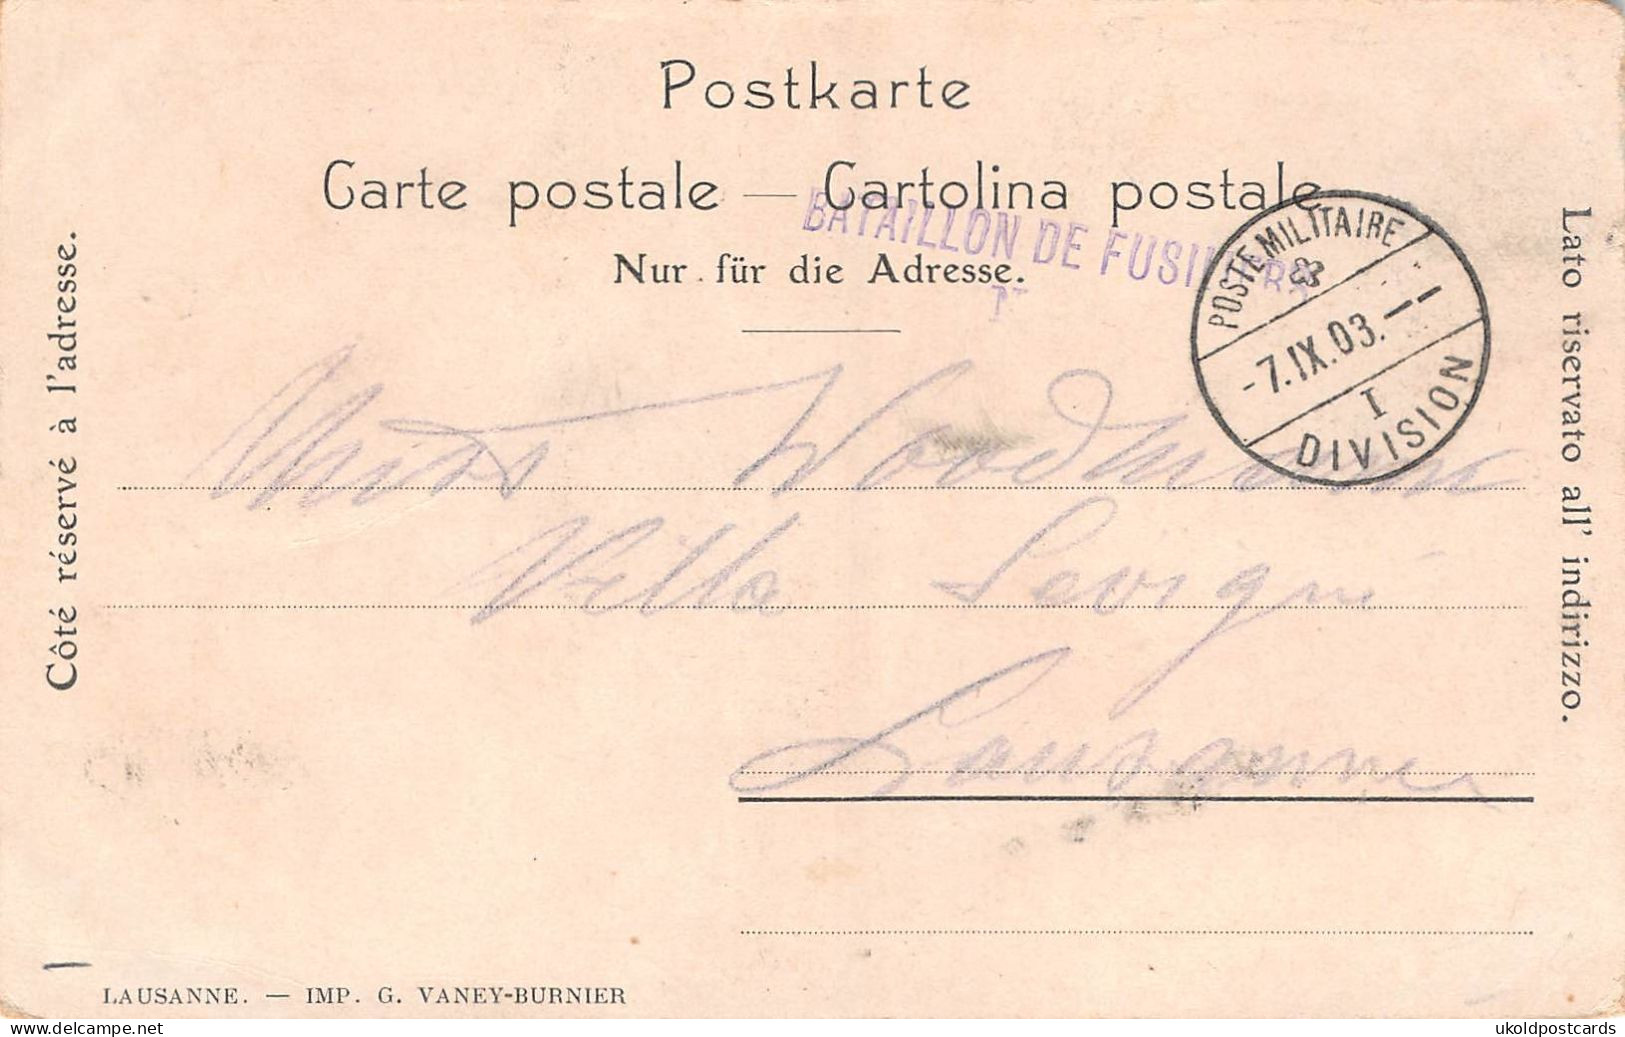 CPA  Suisse, PAMPIGNY, 1903 - Pampigny